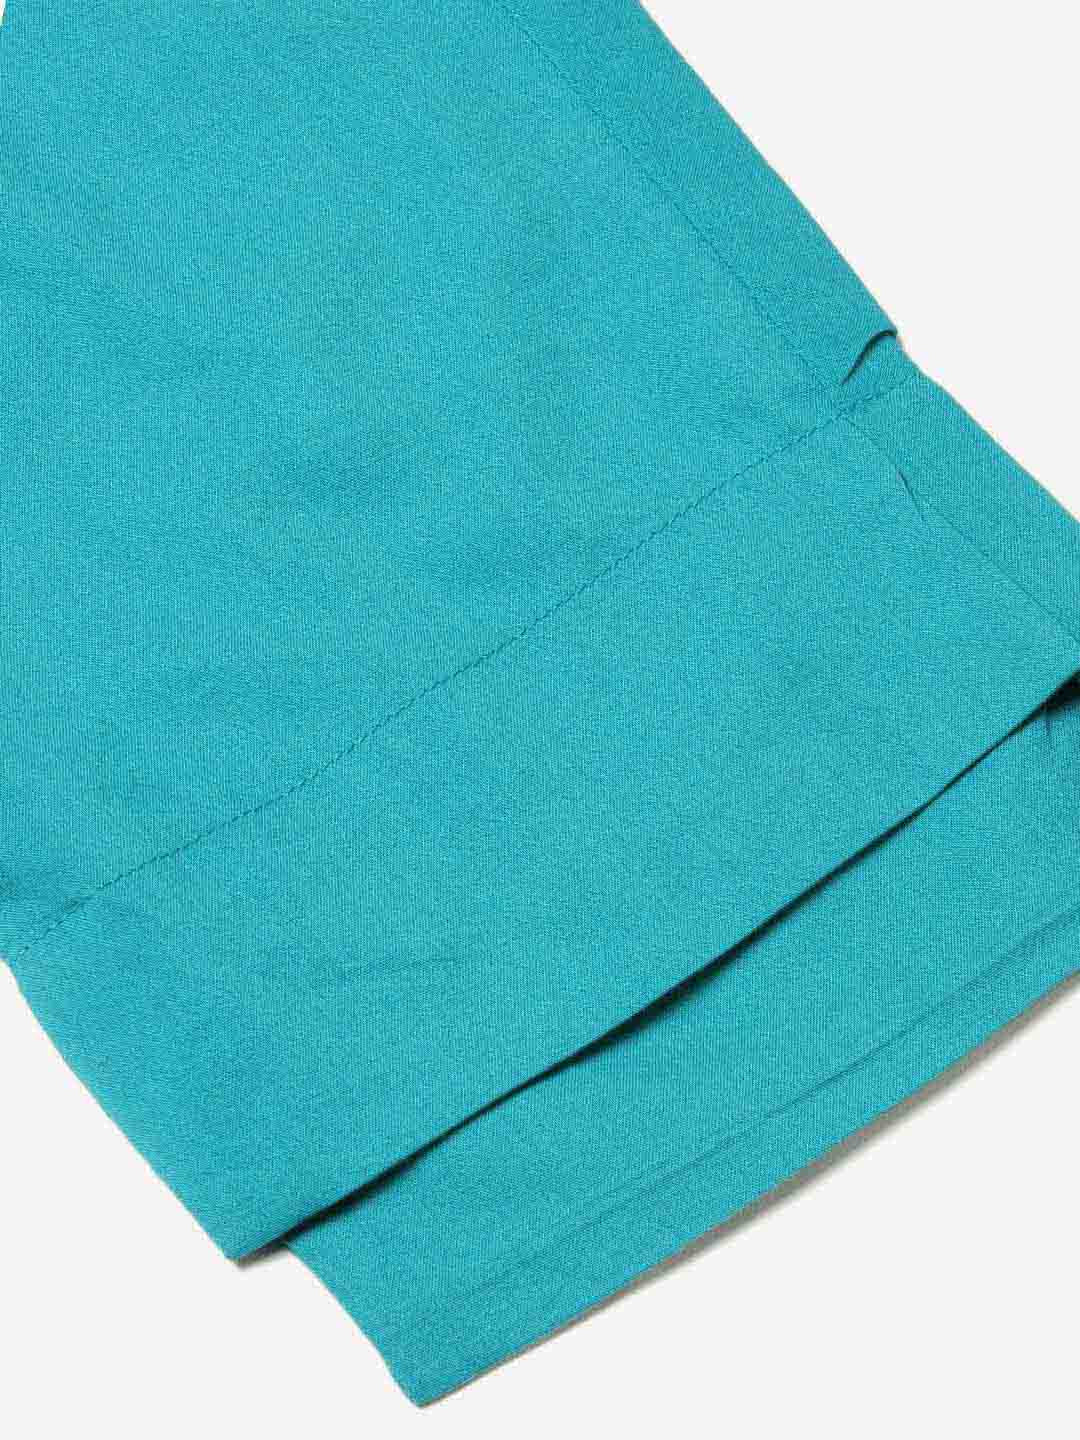 Turquoise Blue Ethnic Wear Cotton Pants